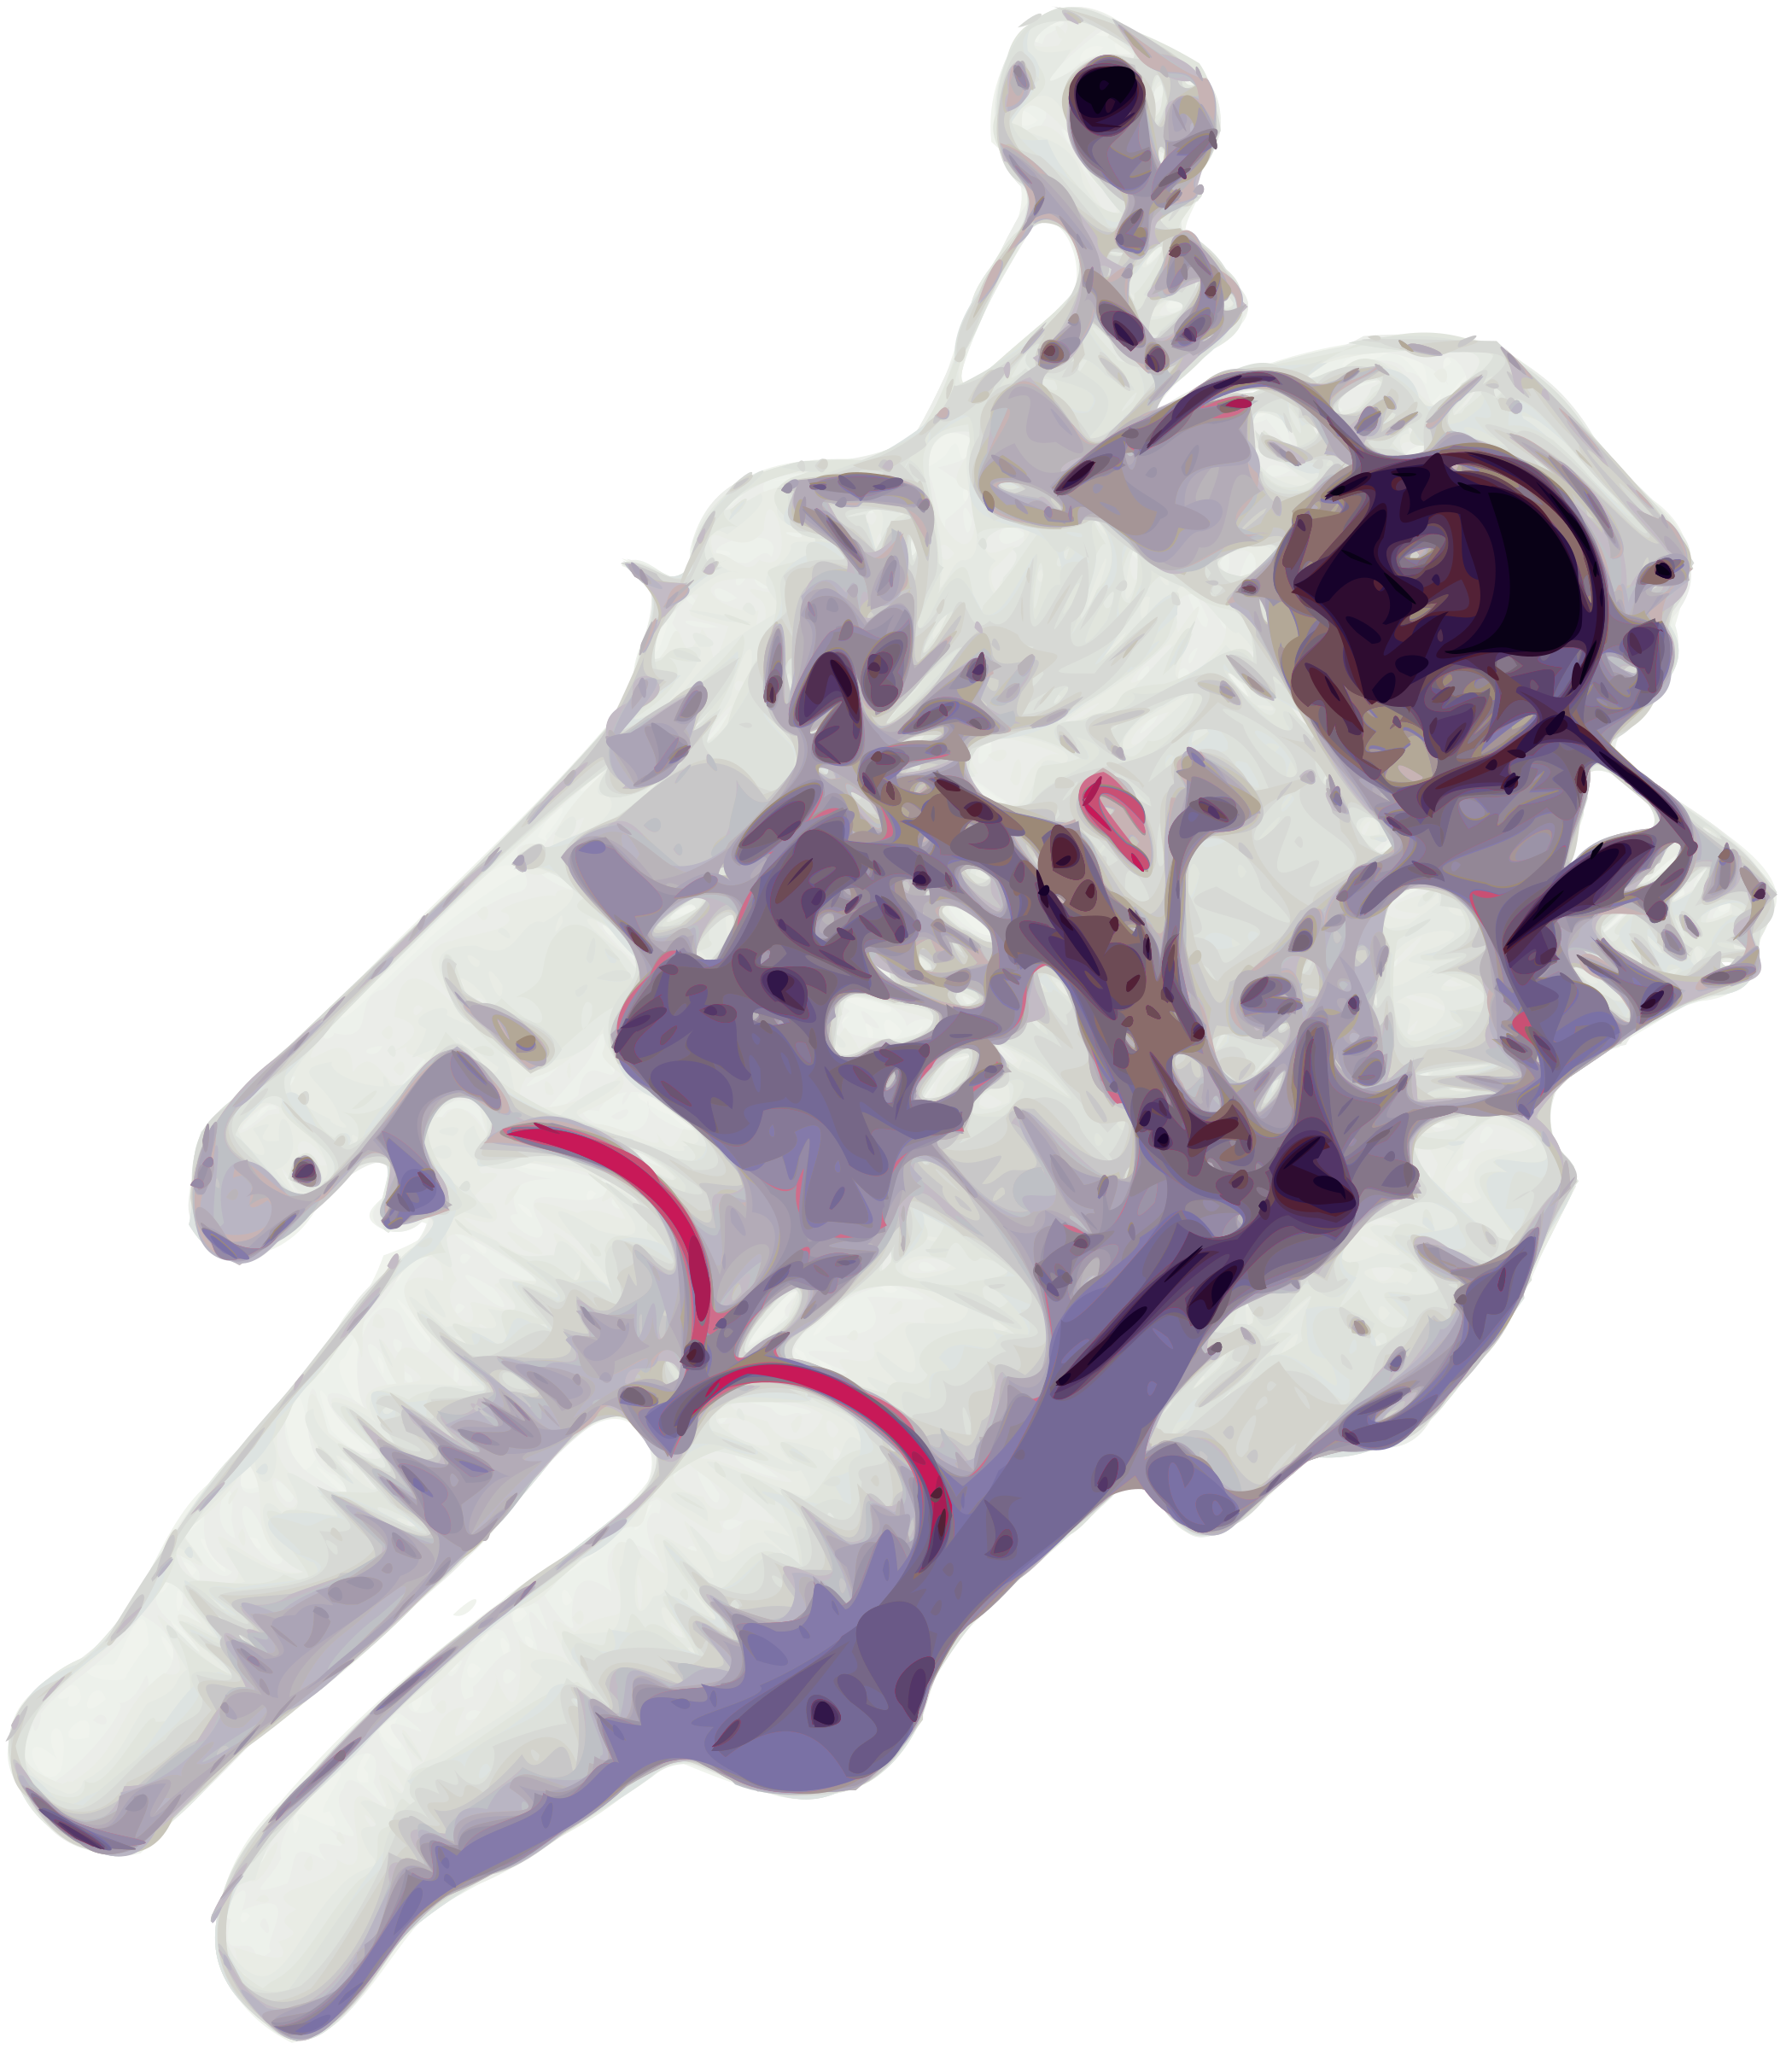 Astronaut Transparent Background PNG Image